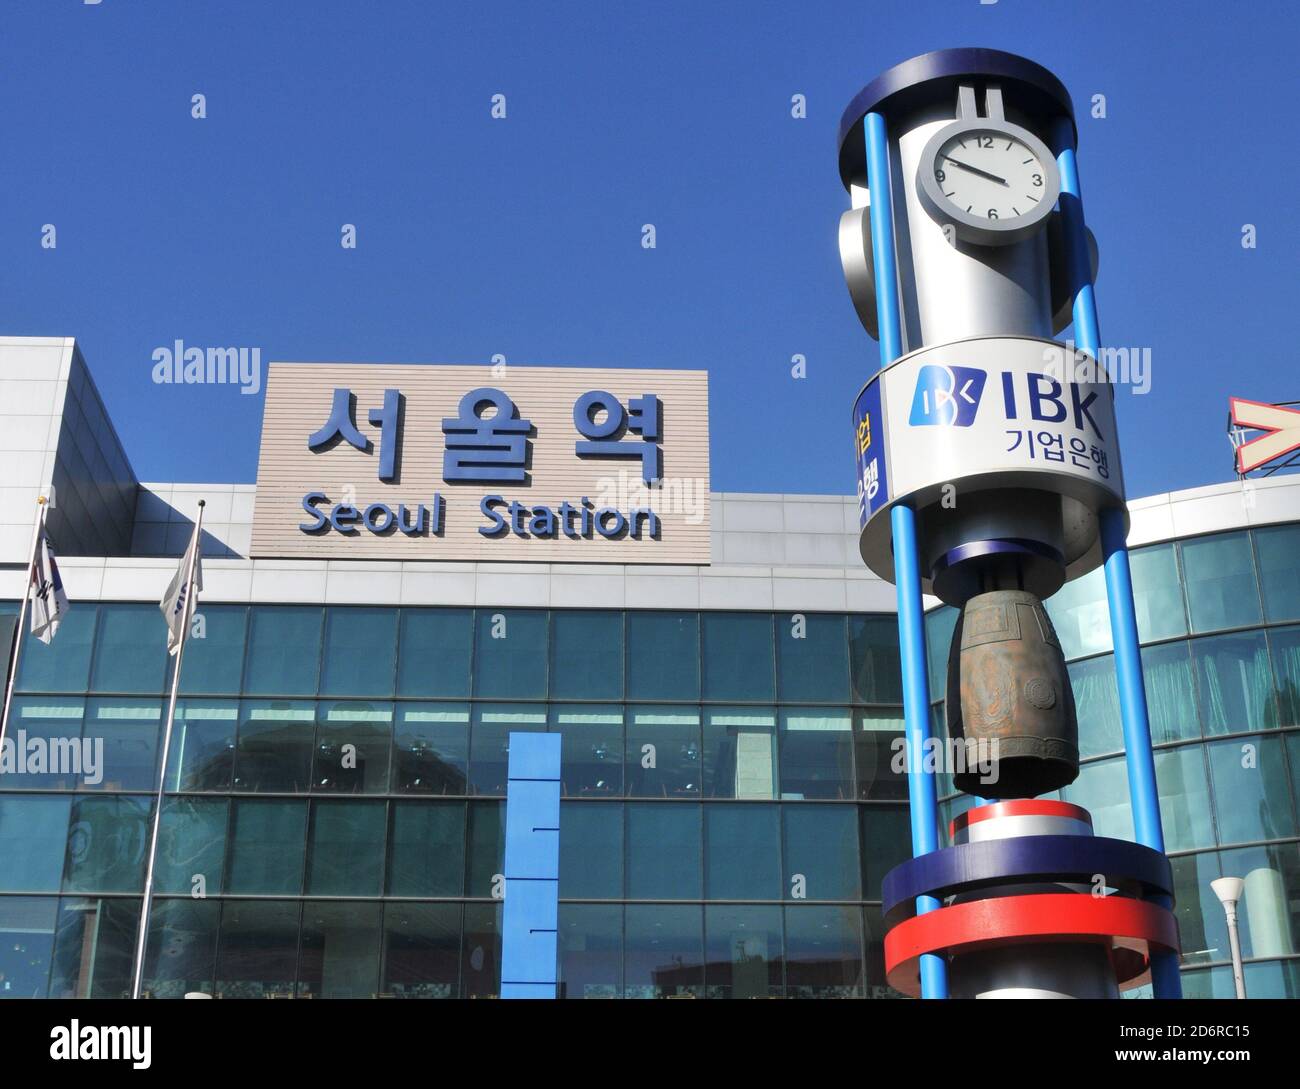 Seoul railway station, South Korea Stock Photo